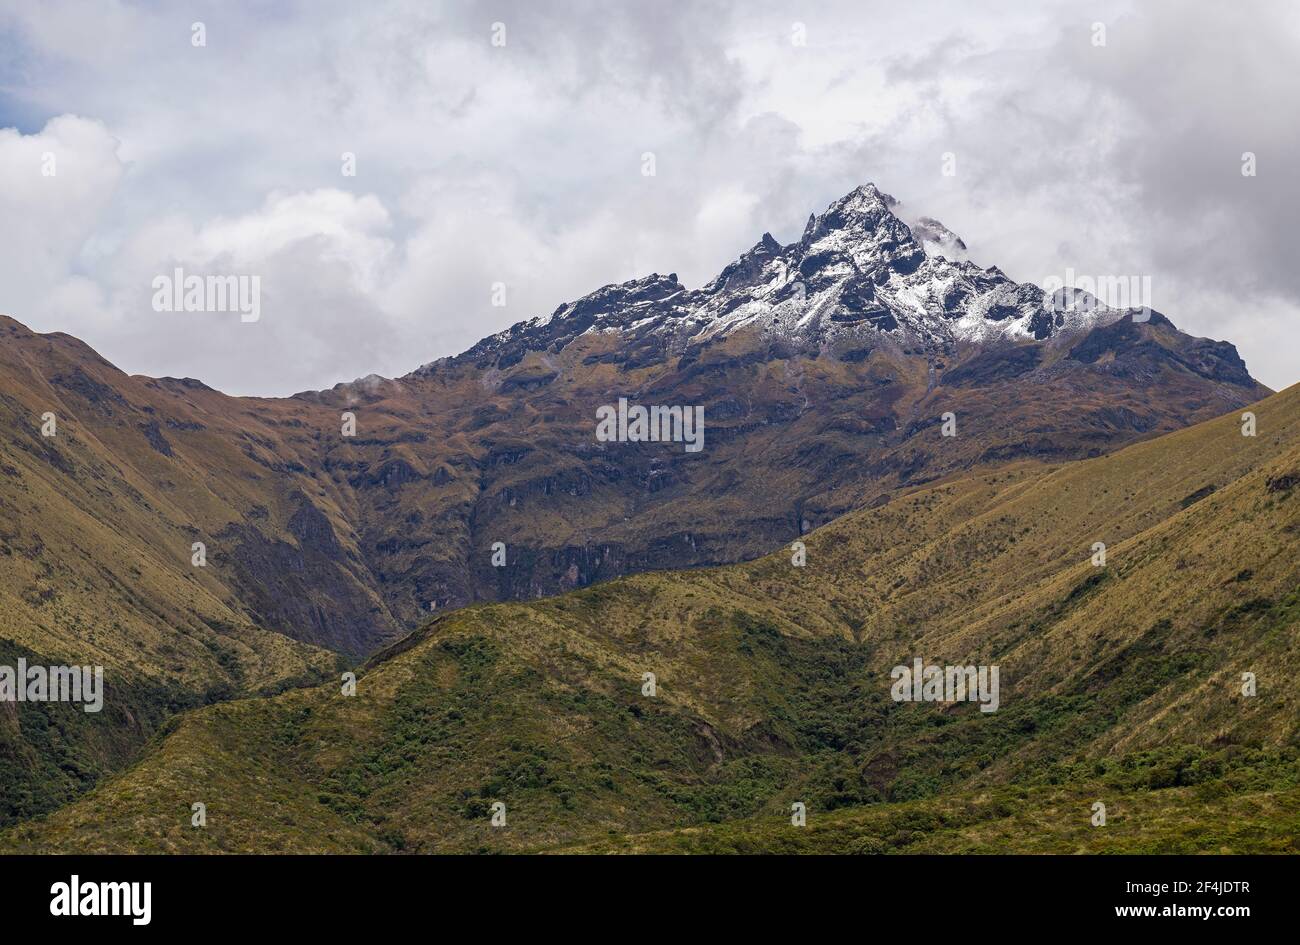 Cotacachi volcano peak with snow, Andes mountains near Otavalo and Quito, Ecuador. Stock Photo